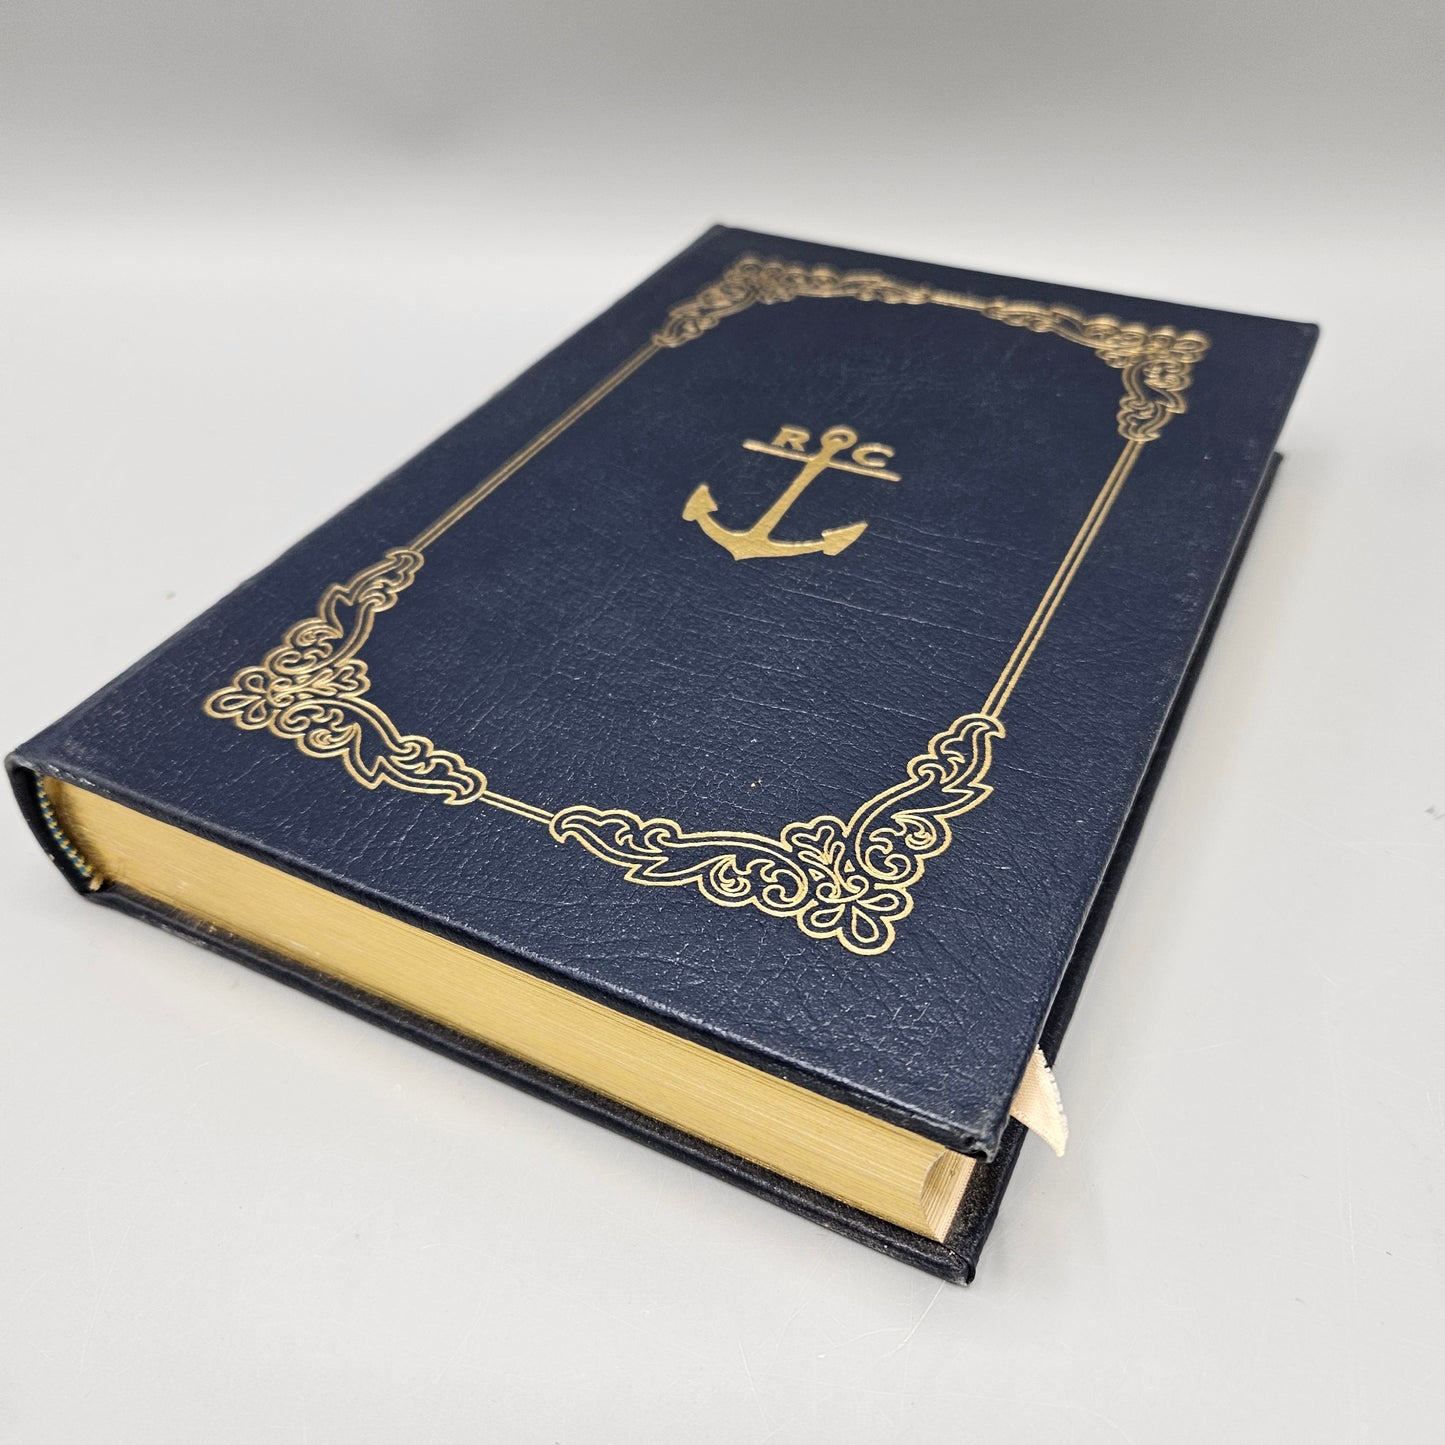 Leatherbound Book - Daniel Dafoe "Robinson Crusoe" Easton Press